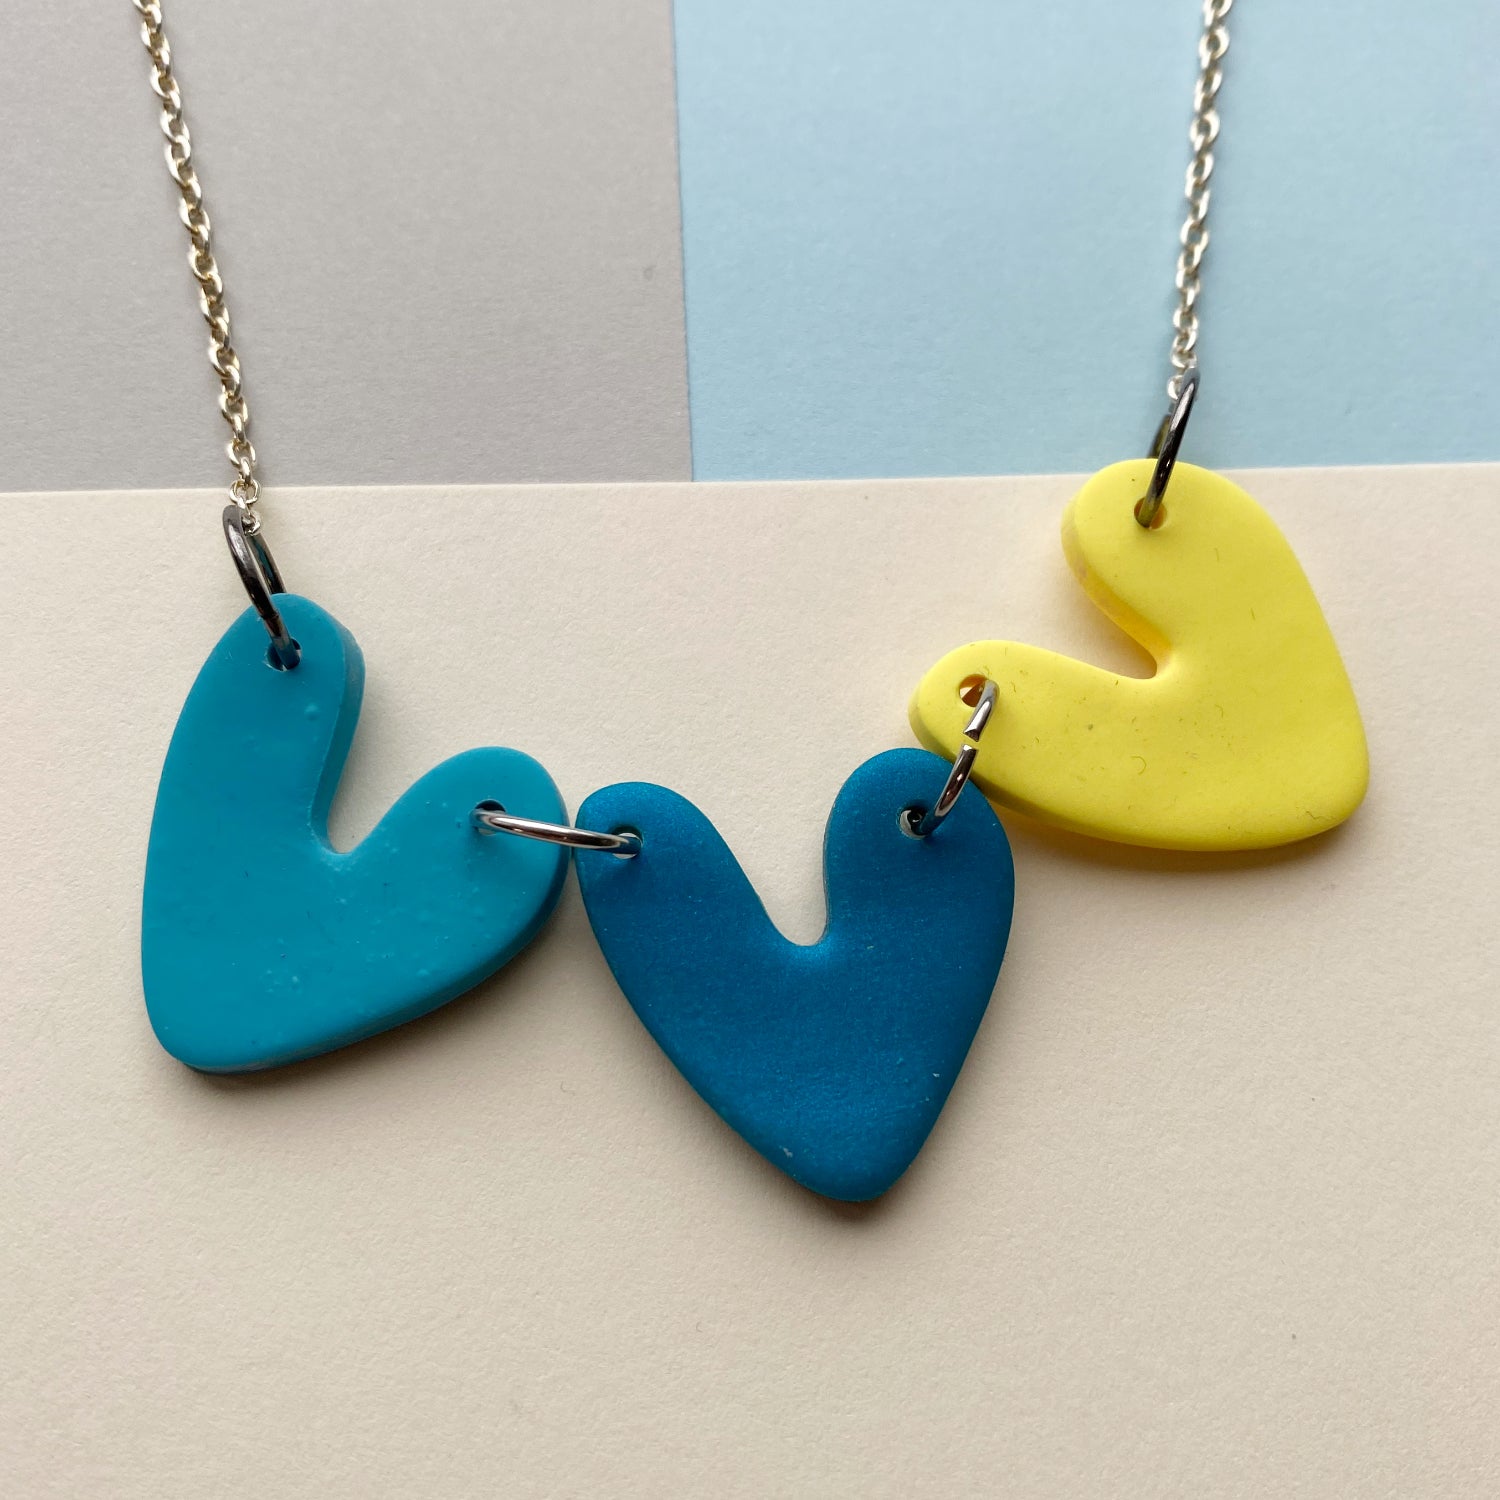 Love Heart necklace - The Argentum Design Co